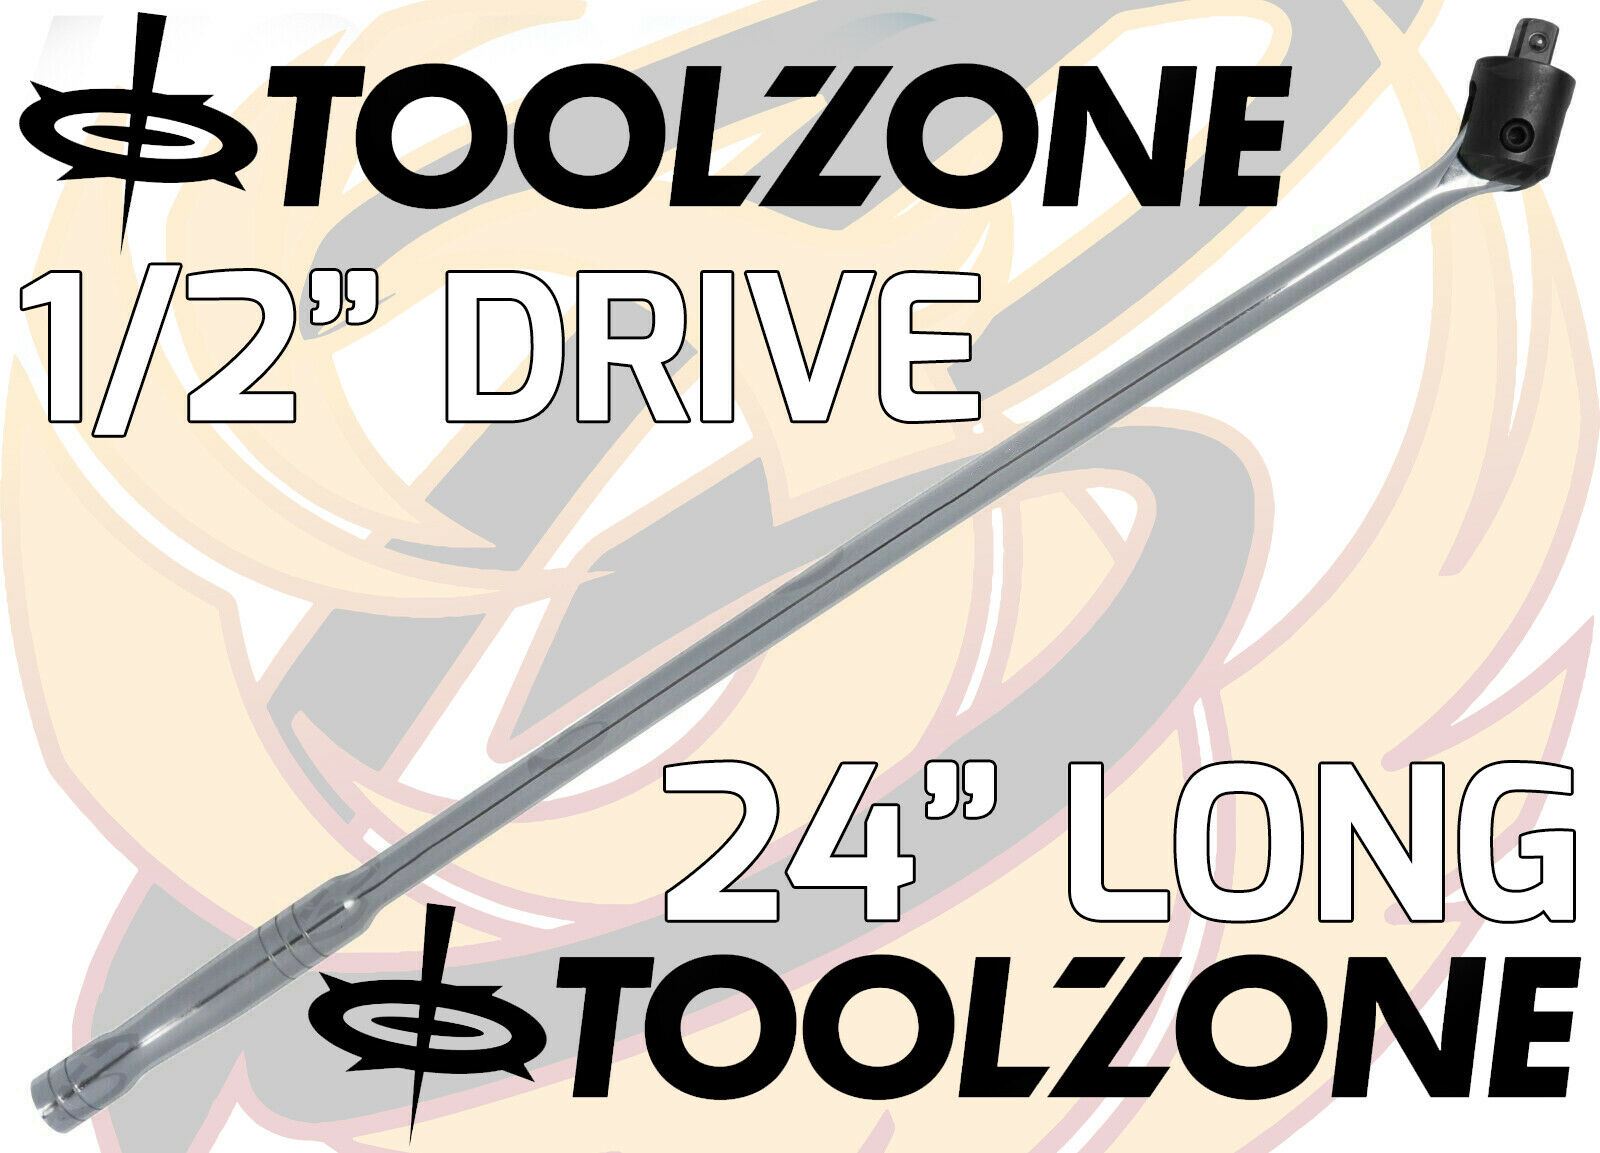 TOOLZONE 1/2" DRIVE 24" LONG BREAKER BAR